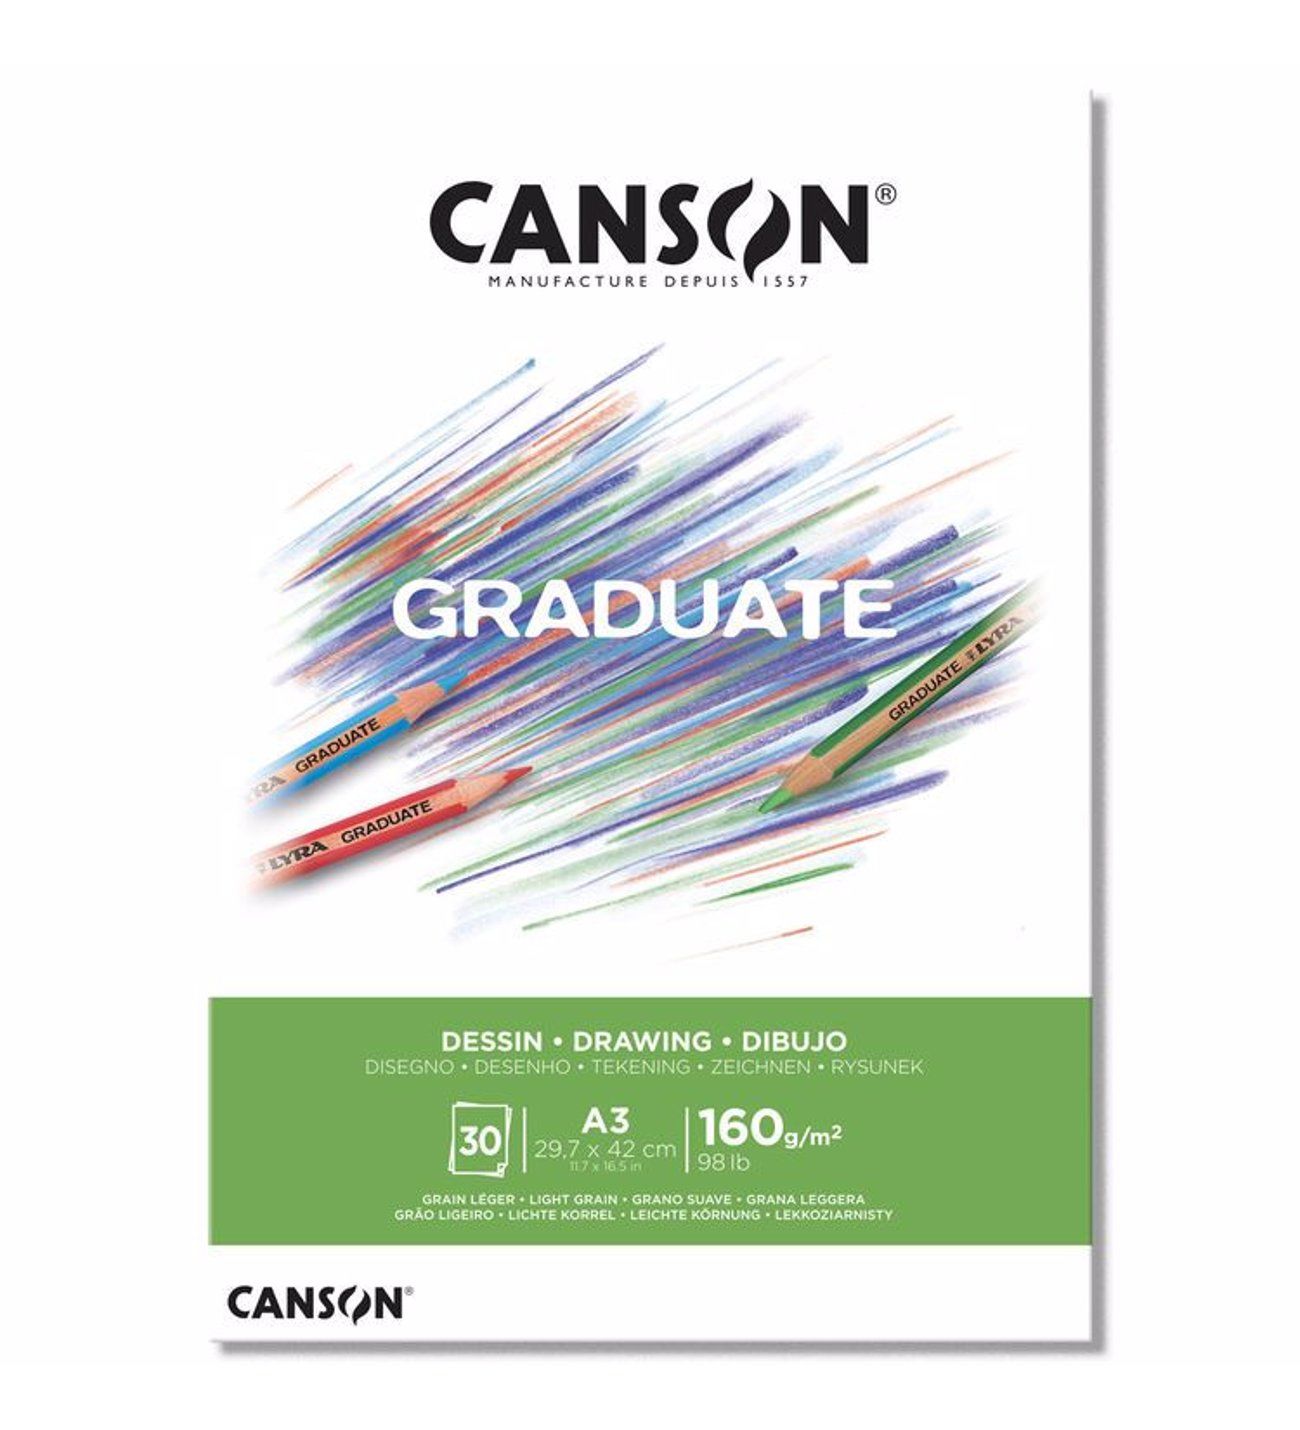 Canson Graduate Drawing Çizim Defteri A3 160gr 30 Yaprak